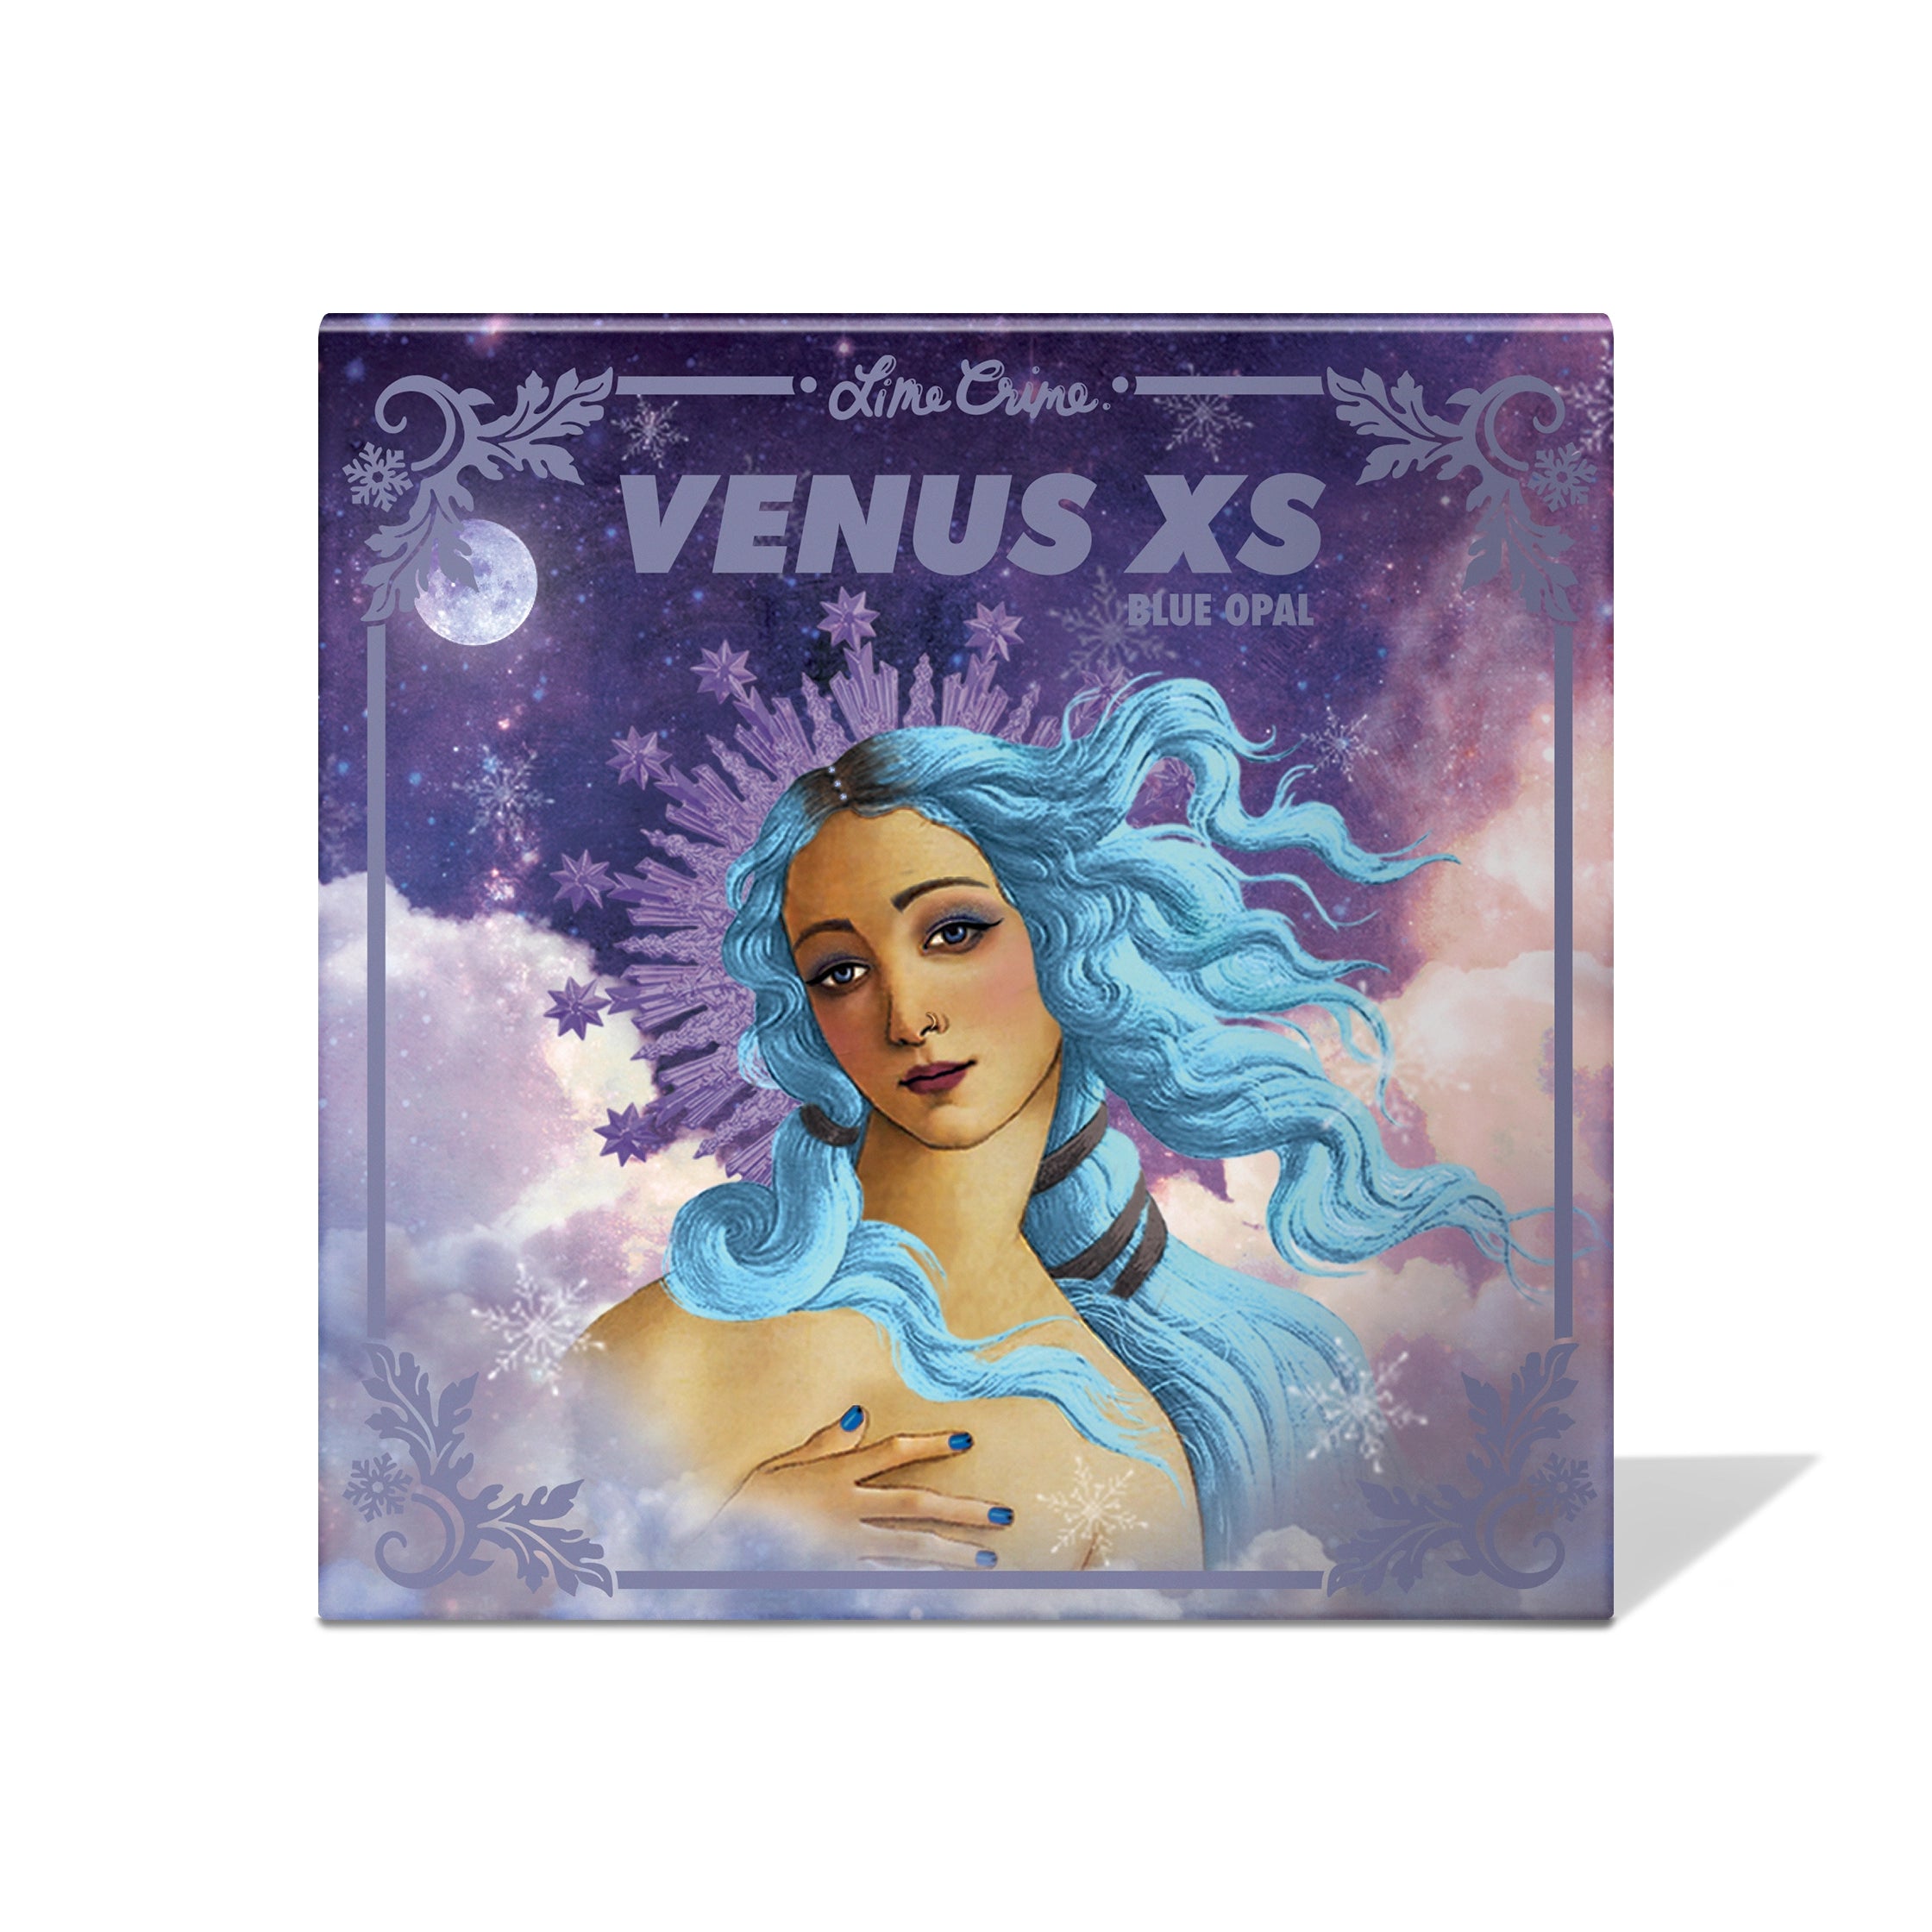 Venus XS: Blue Opal